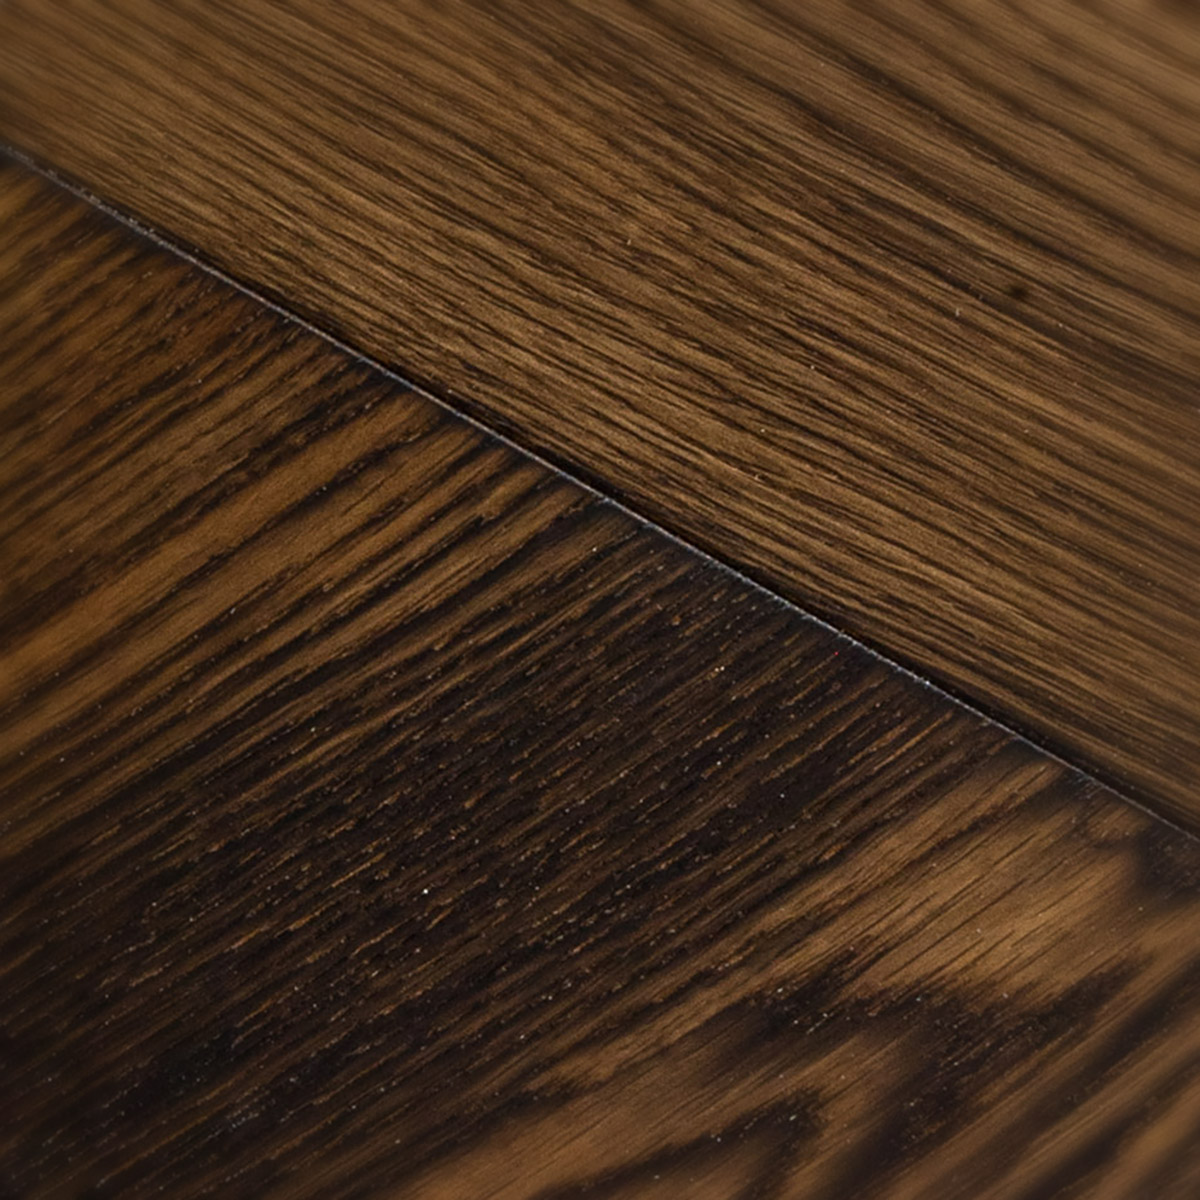 Juniper Avenue - Geometric Diamond Shaped Wood Floor close-up